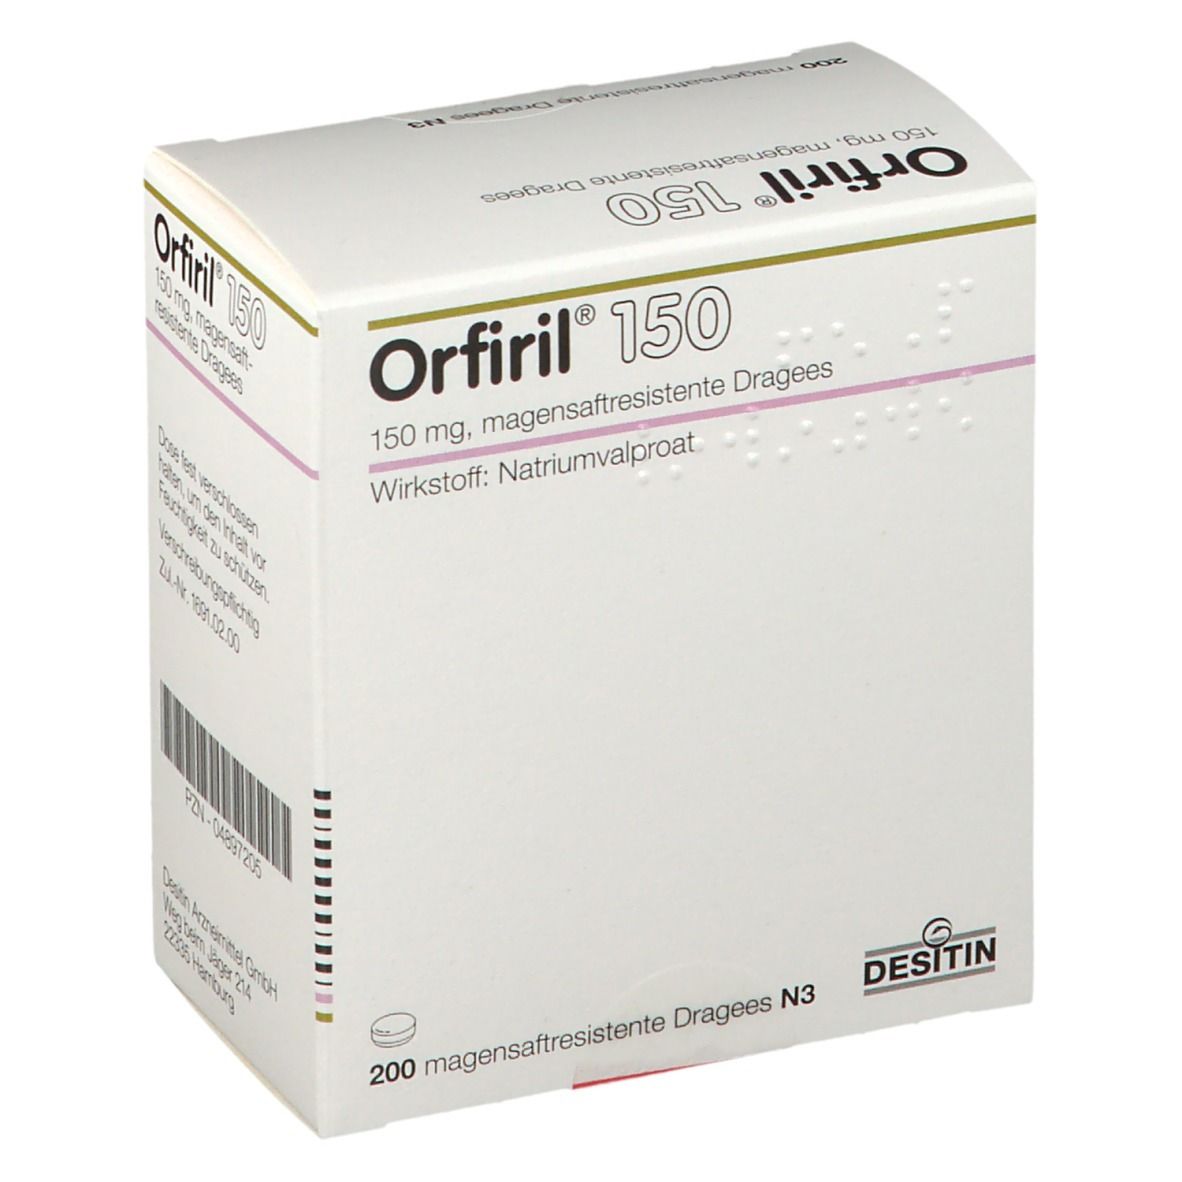 Orfiril® 150